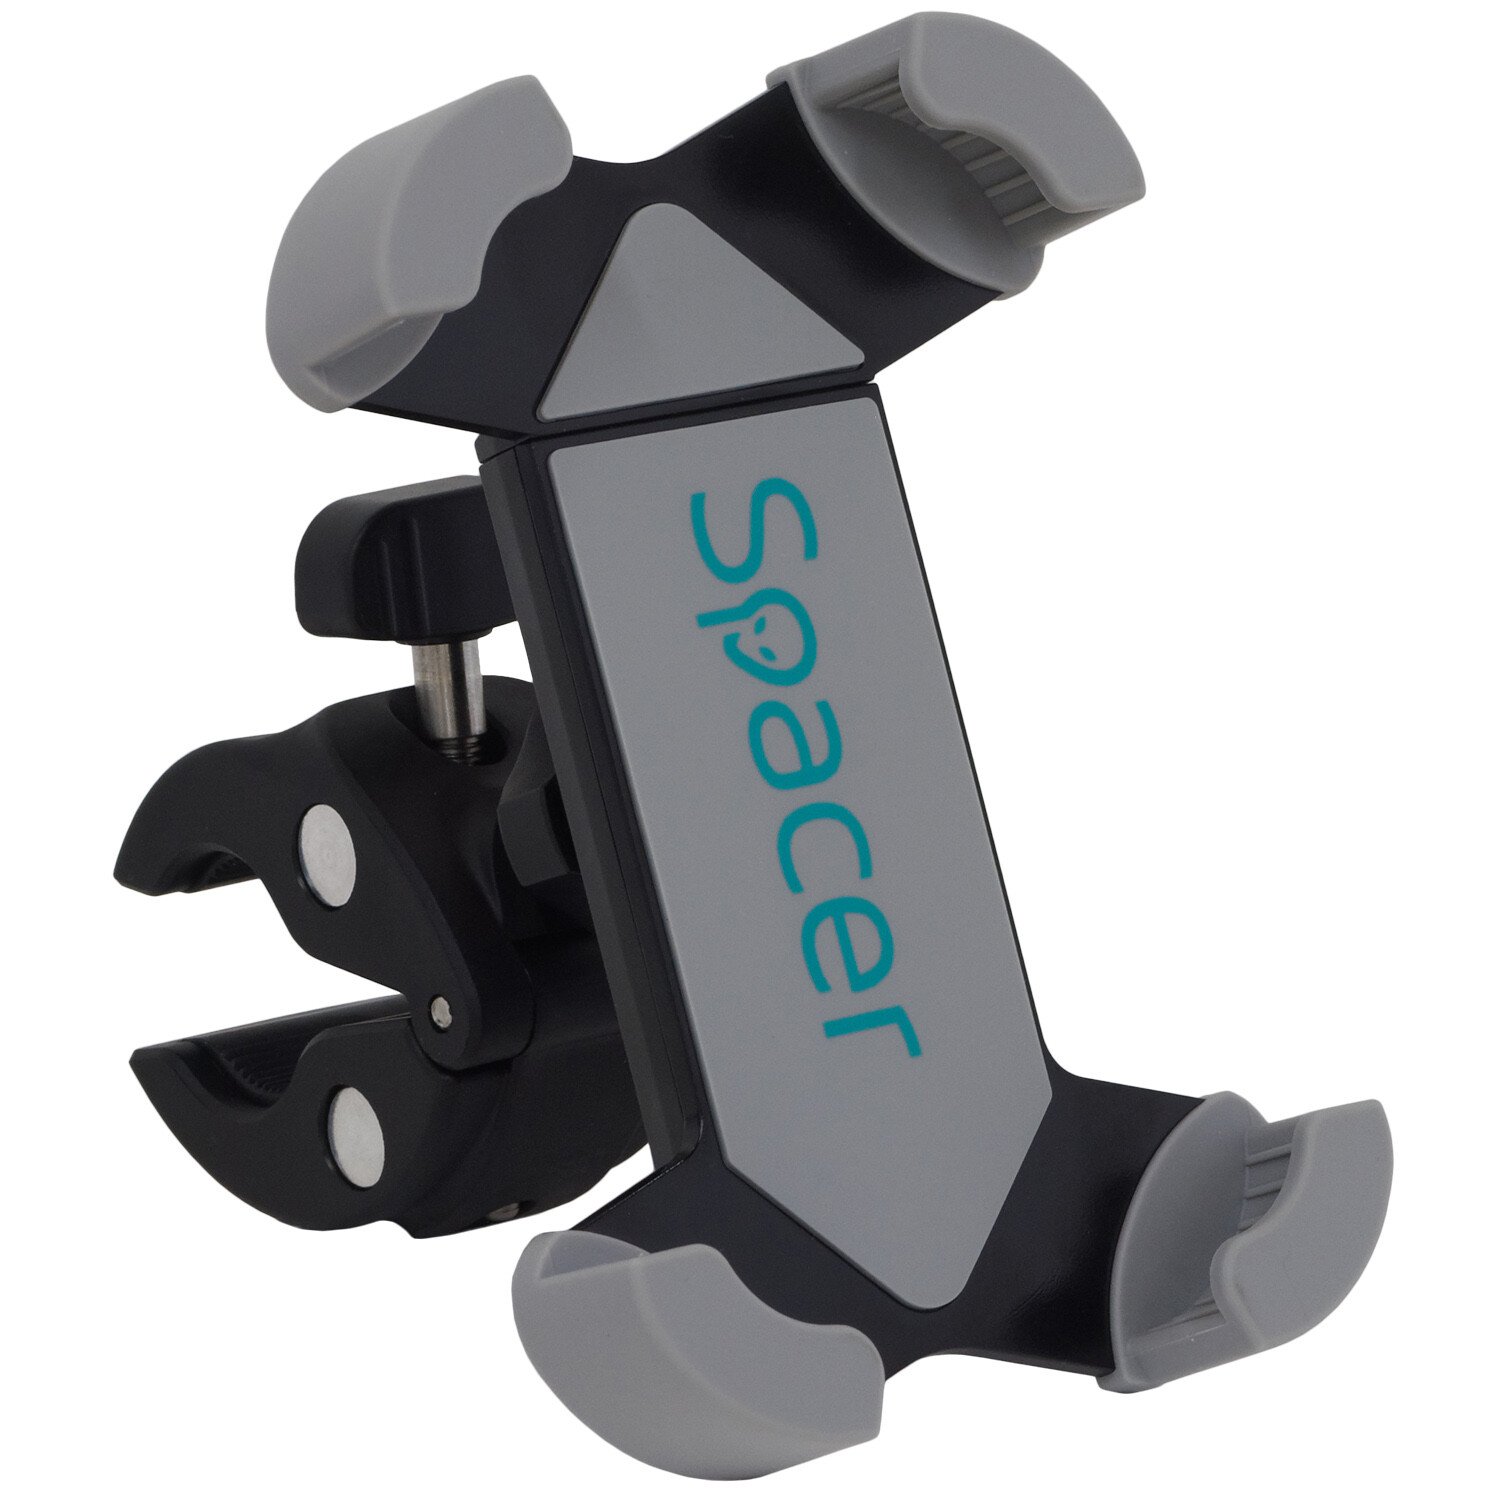 SUPORT Bicicleta SPACER pt SmartPhone, Multi-Purpose, fixare de bare de diferite dimensiuni, Negru, "SPBH-MP-01" thumb